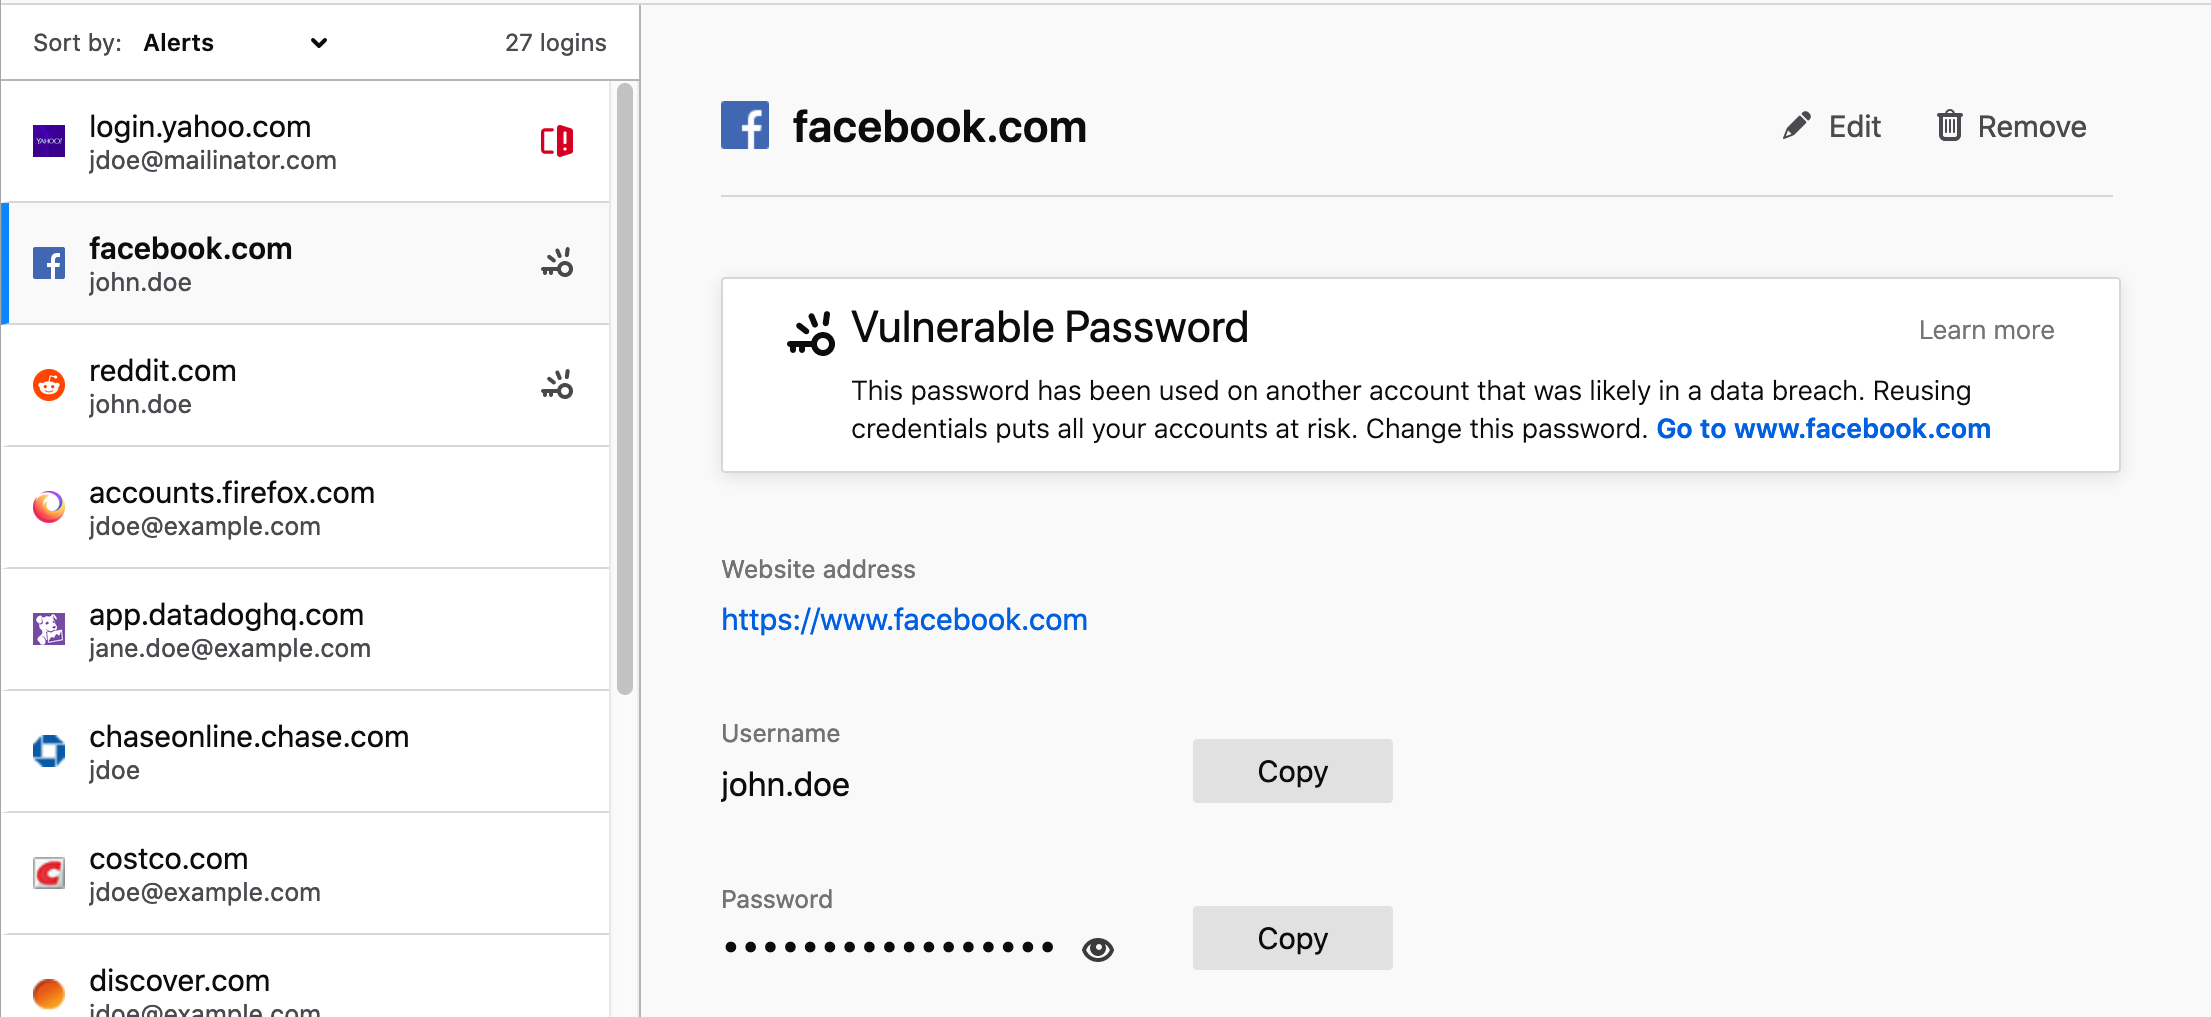 An image showing the screenshot of Firefox breached password alert screen.